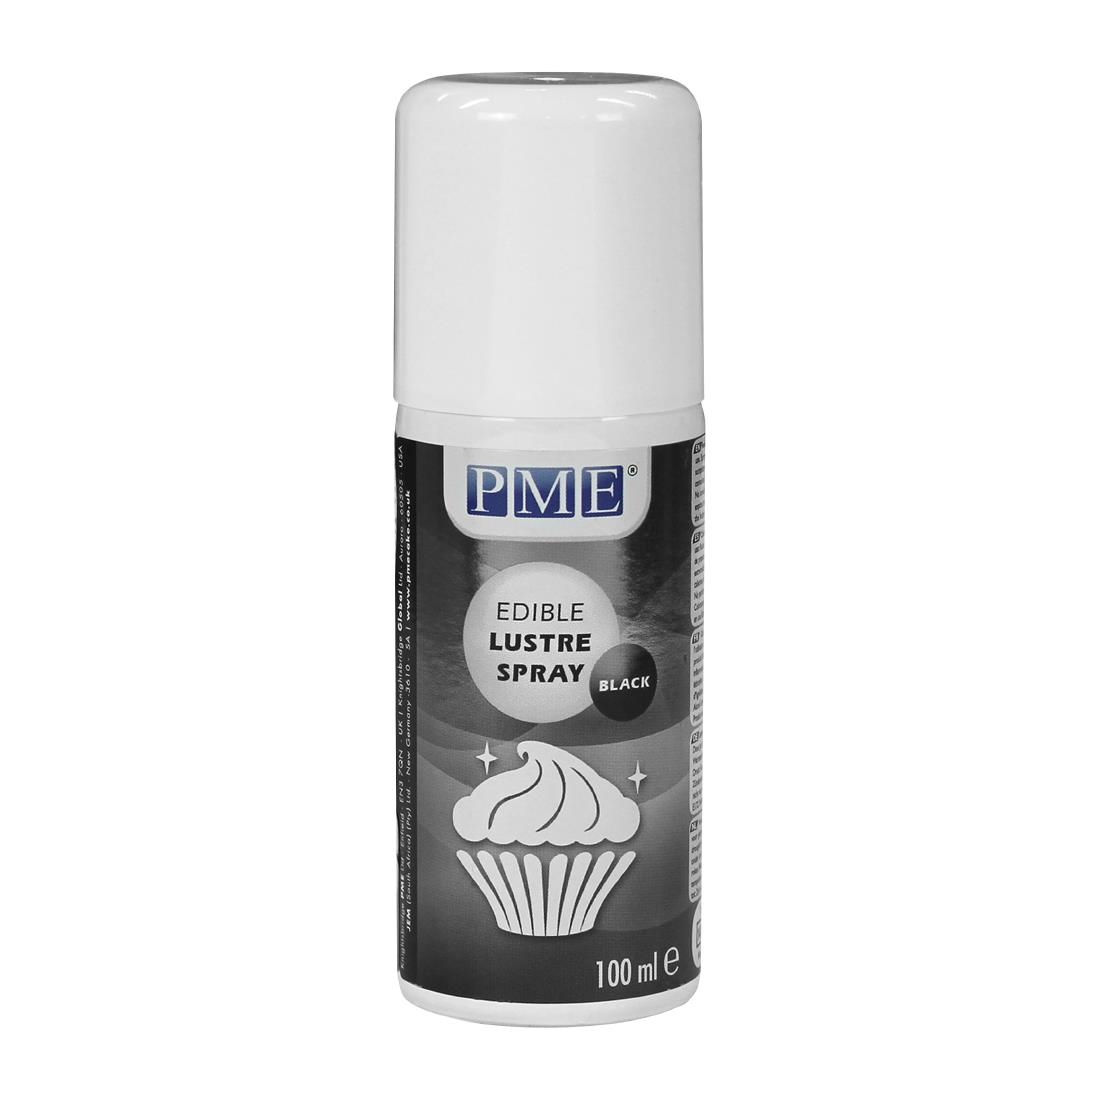 PME Edible Lustre Spray 100ml - Black (HU204)